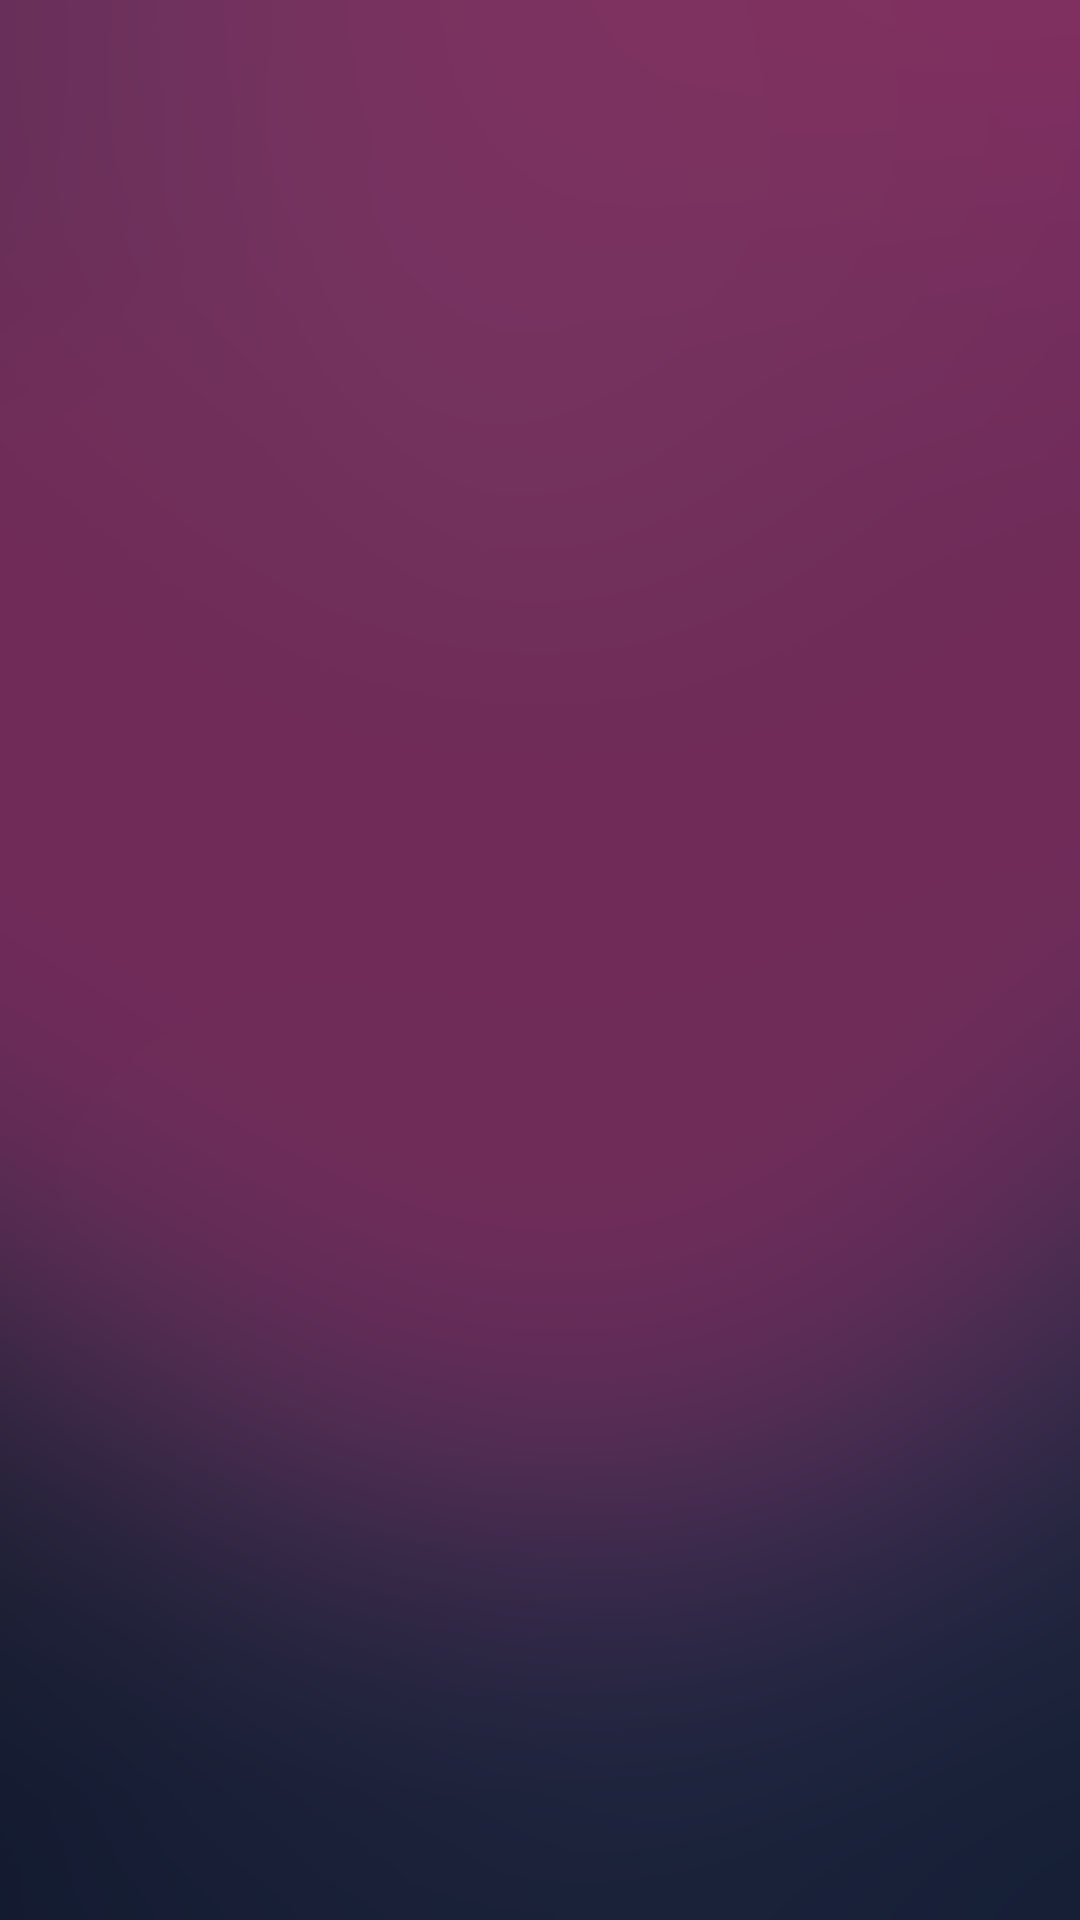 Free Download Simple Purple Gradient Samsung Android Wallpaper Download 1080x19 For Your Desktop Mobile Tablet Explore 72 Simple Purple Wallpaper Pink And Purple Wallpaper Purple Desktop Wallpaper Purple Wallpaper Backgrounds